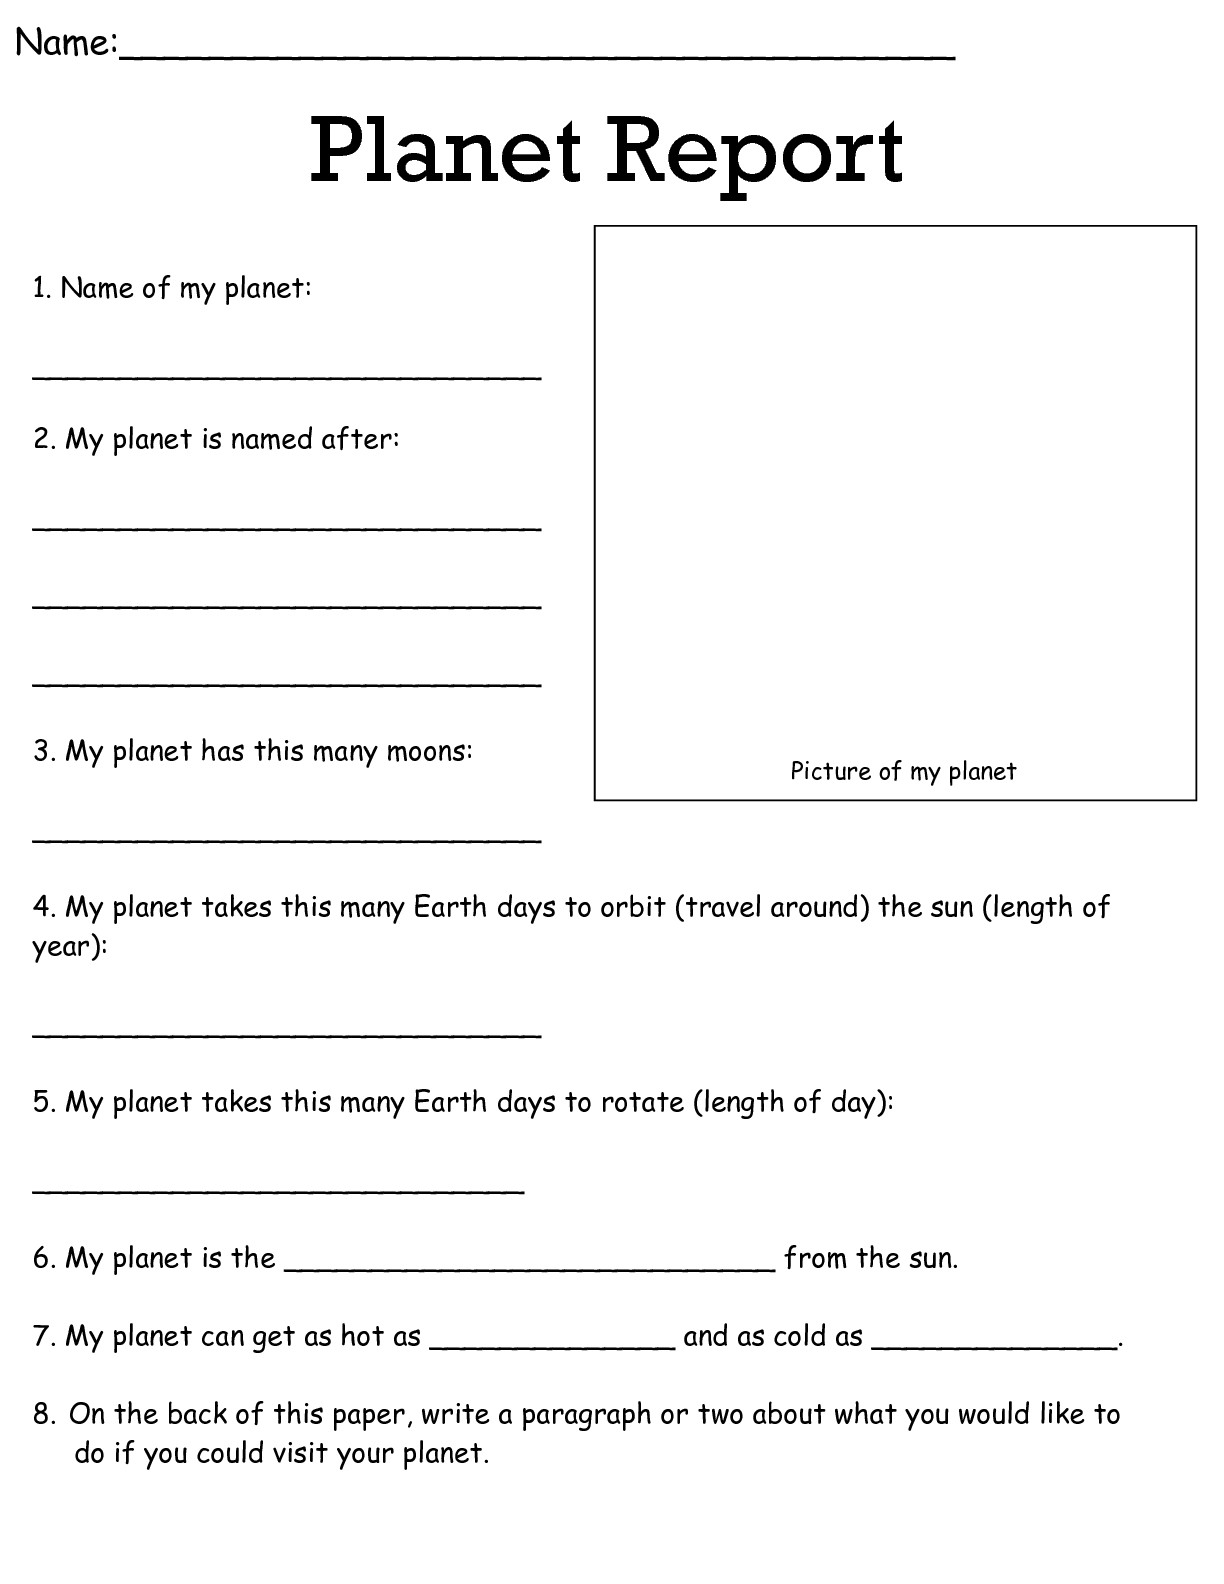 Planet Report Worksheet Example